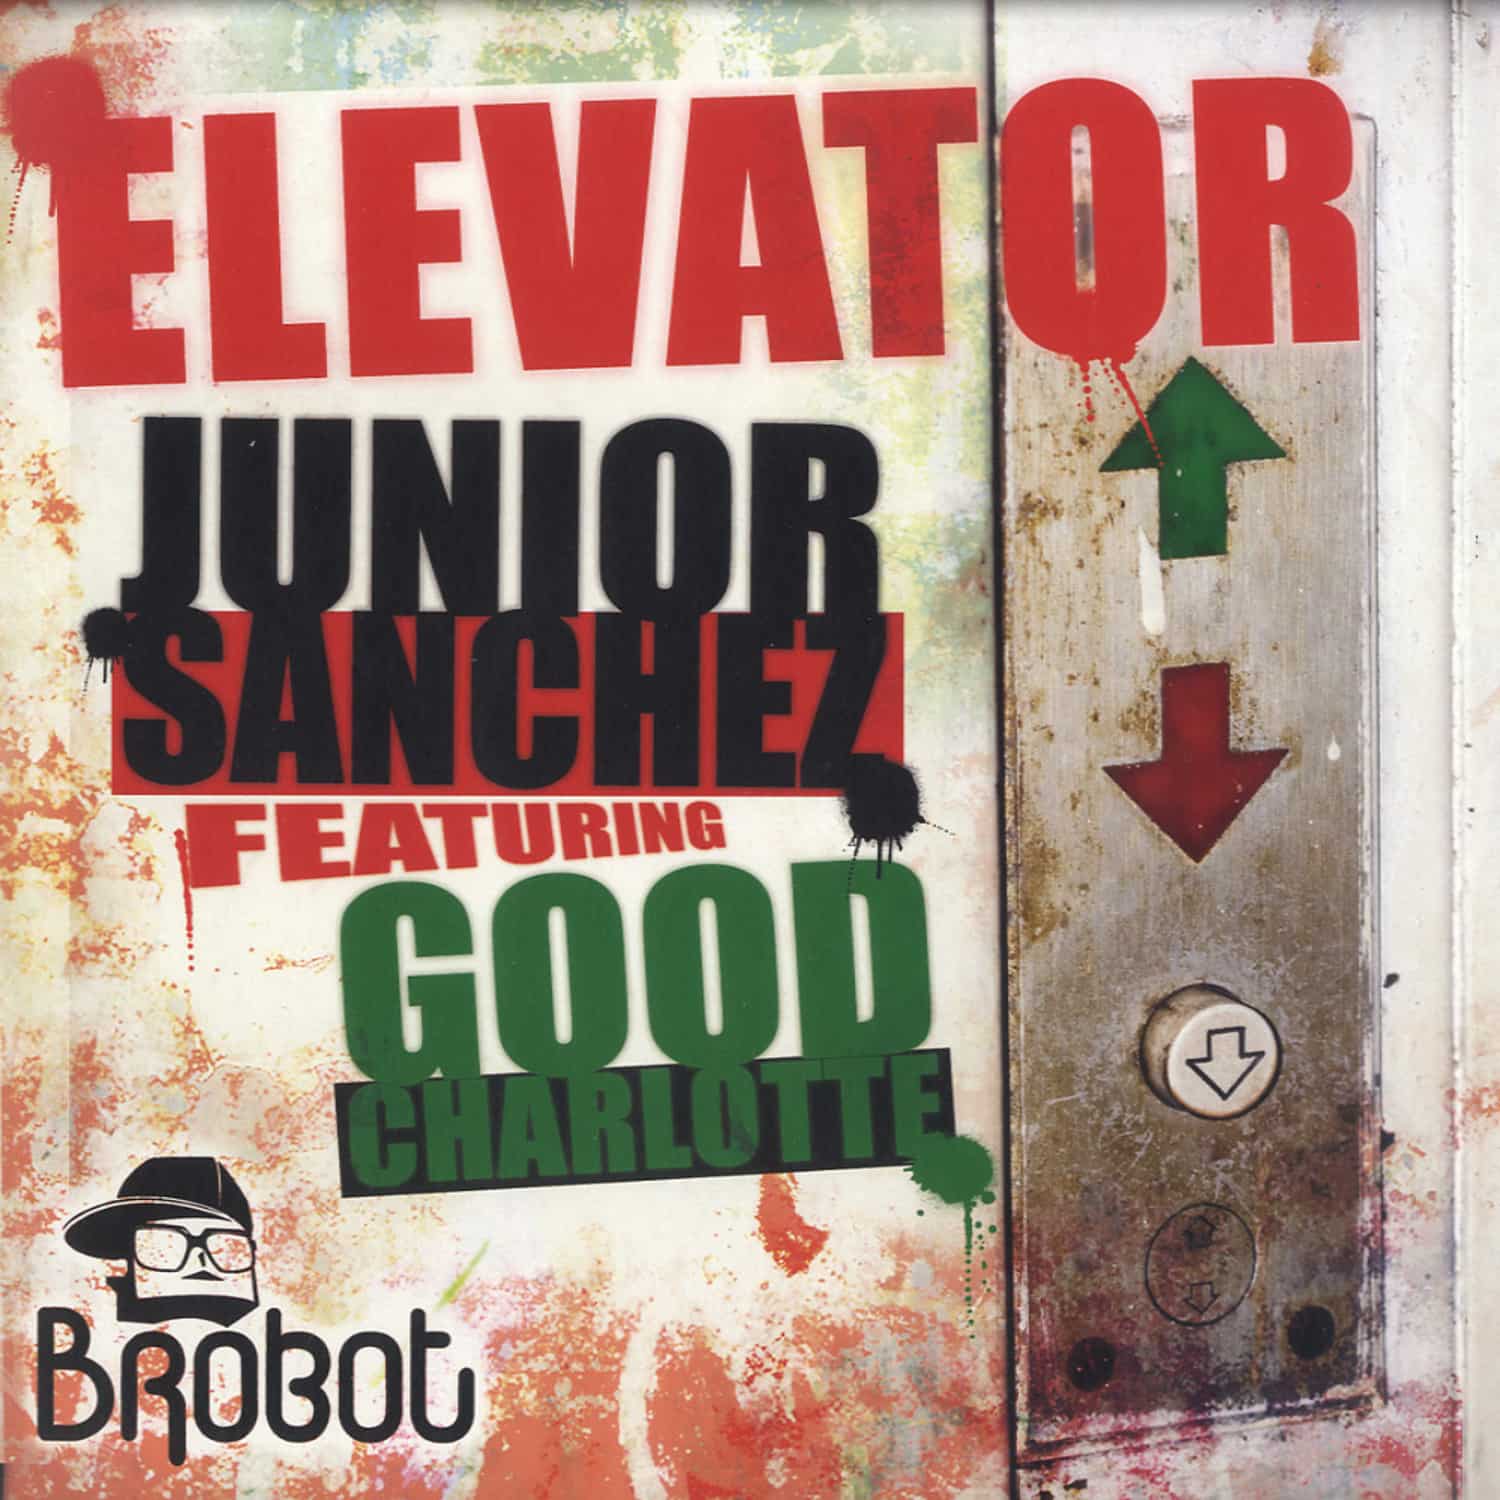 Junior Sanchez feat. Good Charlotte - ELEVATOR